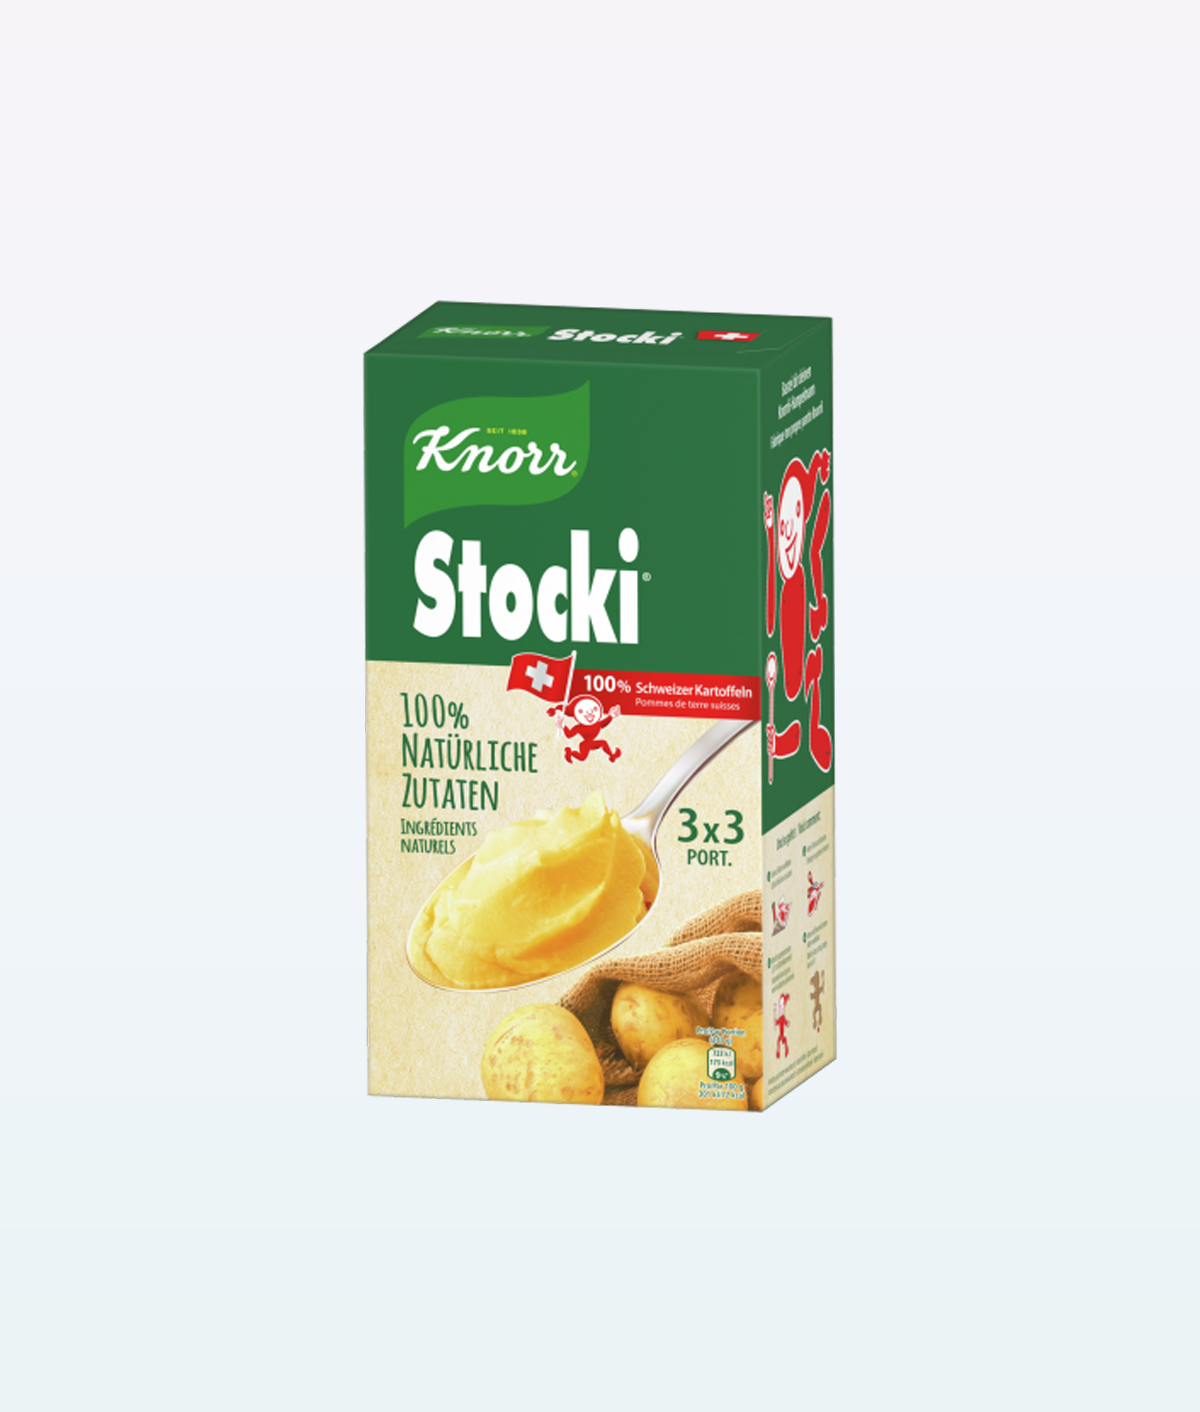 Knorr Stocki Potato 3×3 portions 330g